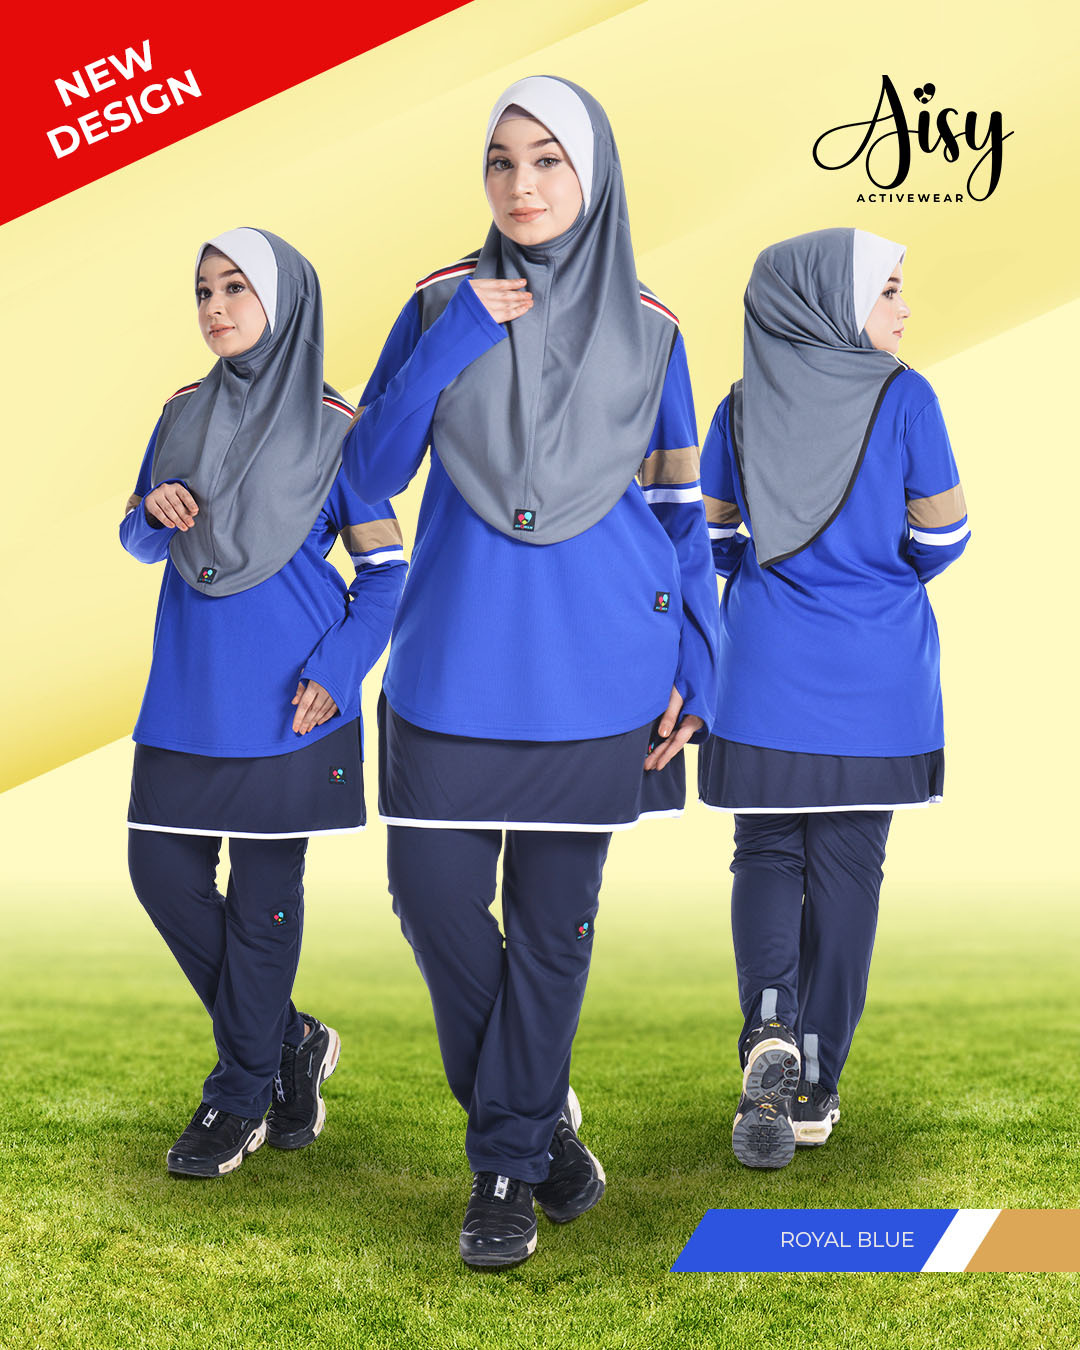 Katalog Aisy Activewear A(3) Royal Blue